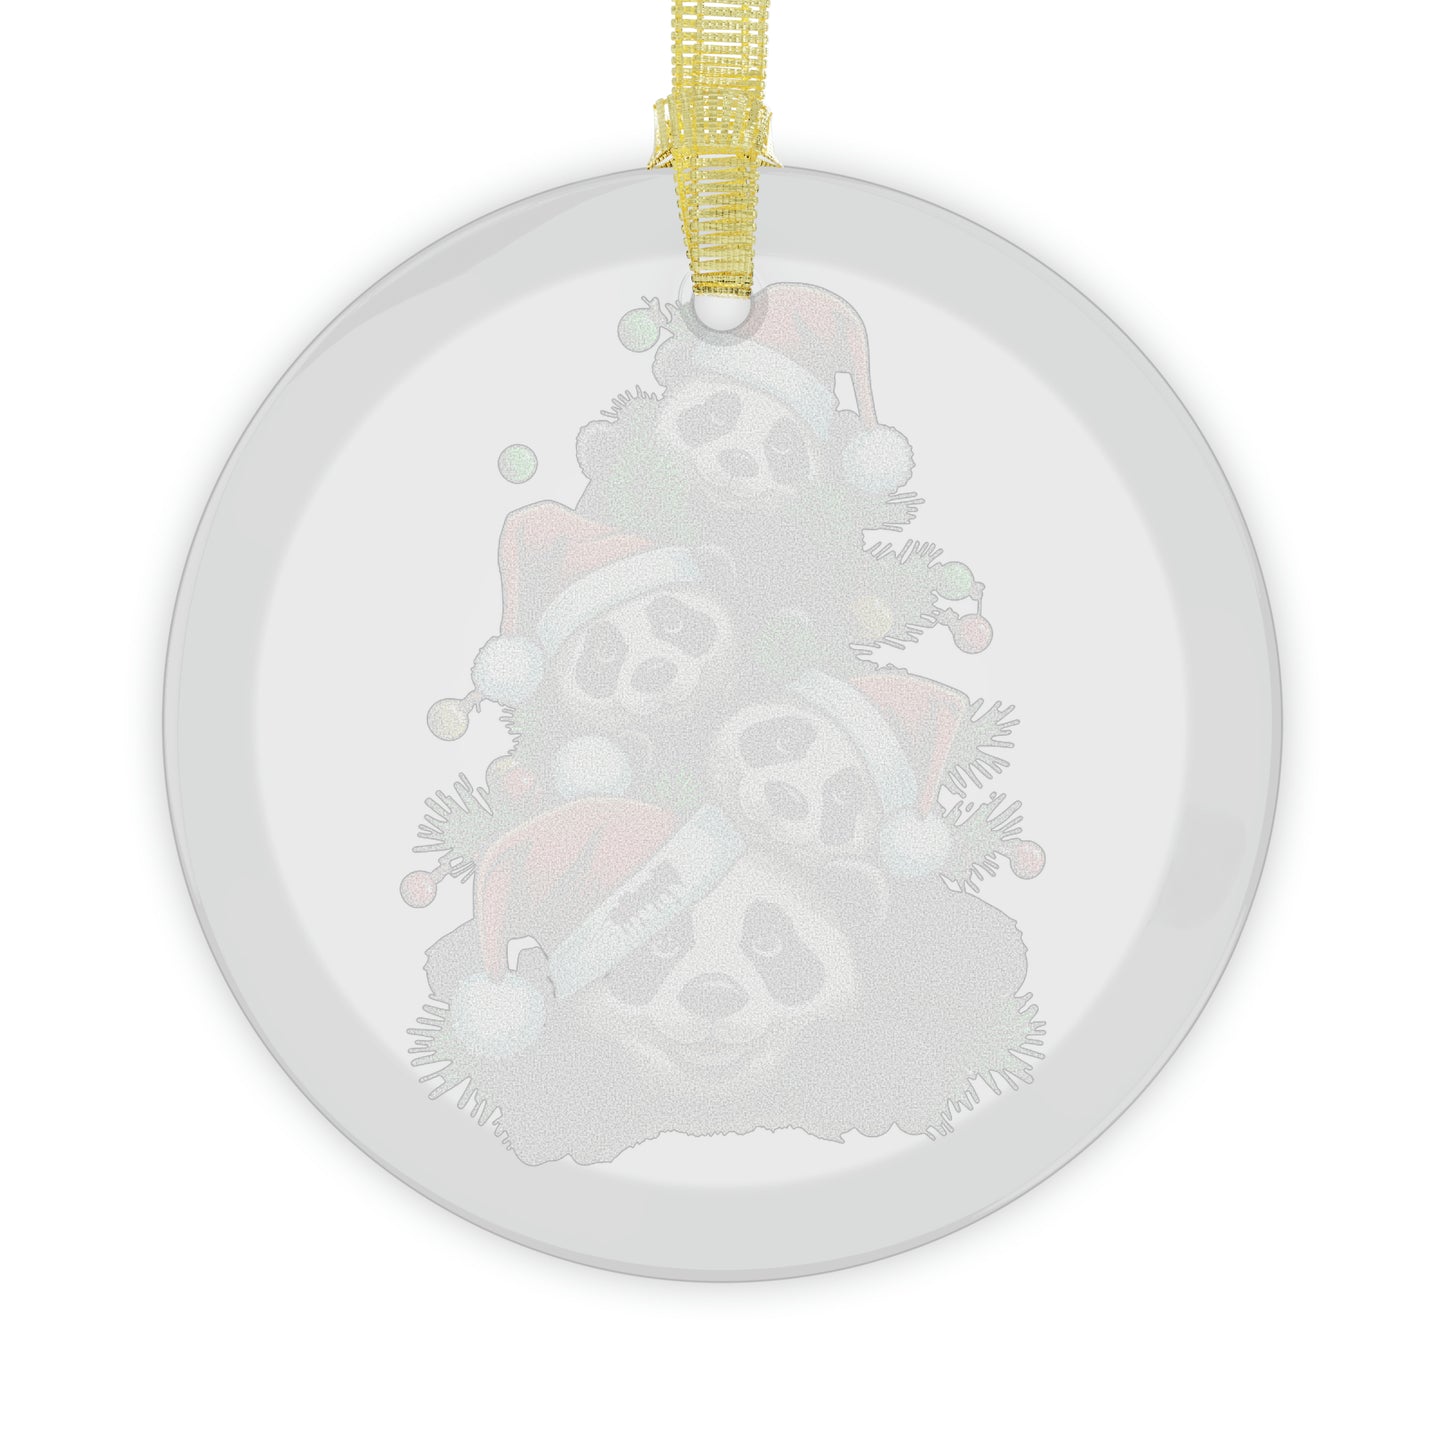 Showtie Panda Christmas Glass Ornaments